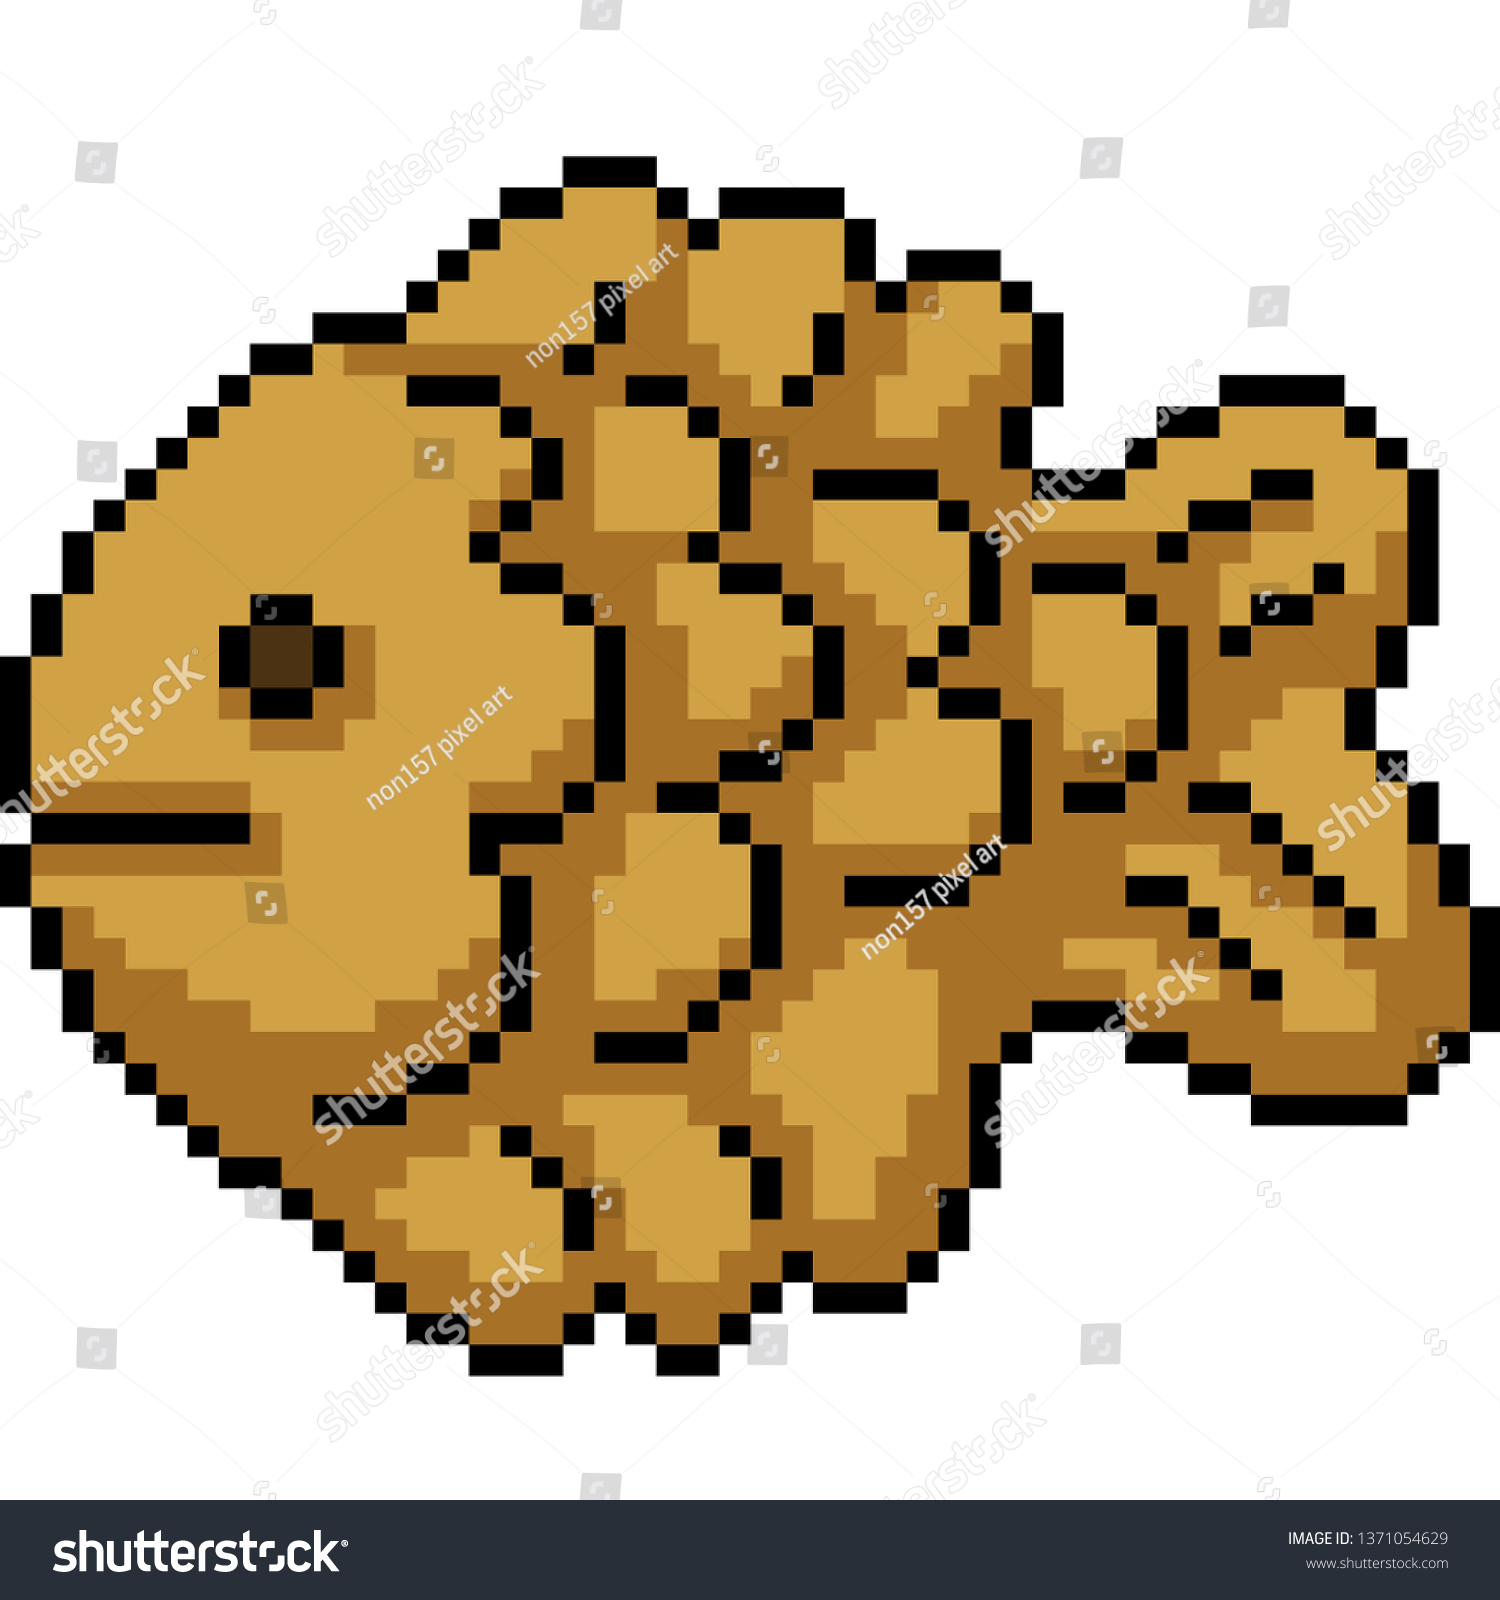 Vector Pixel Art Fish Cookie Isolated のベクター画像素材 ロイヤリティフリー